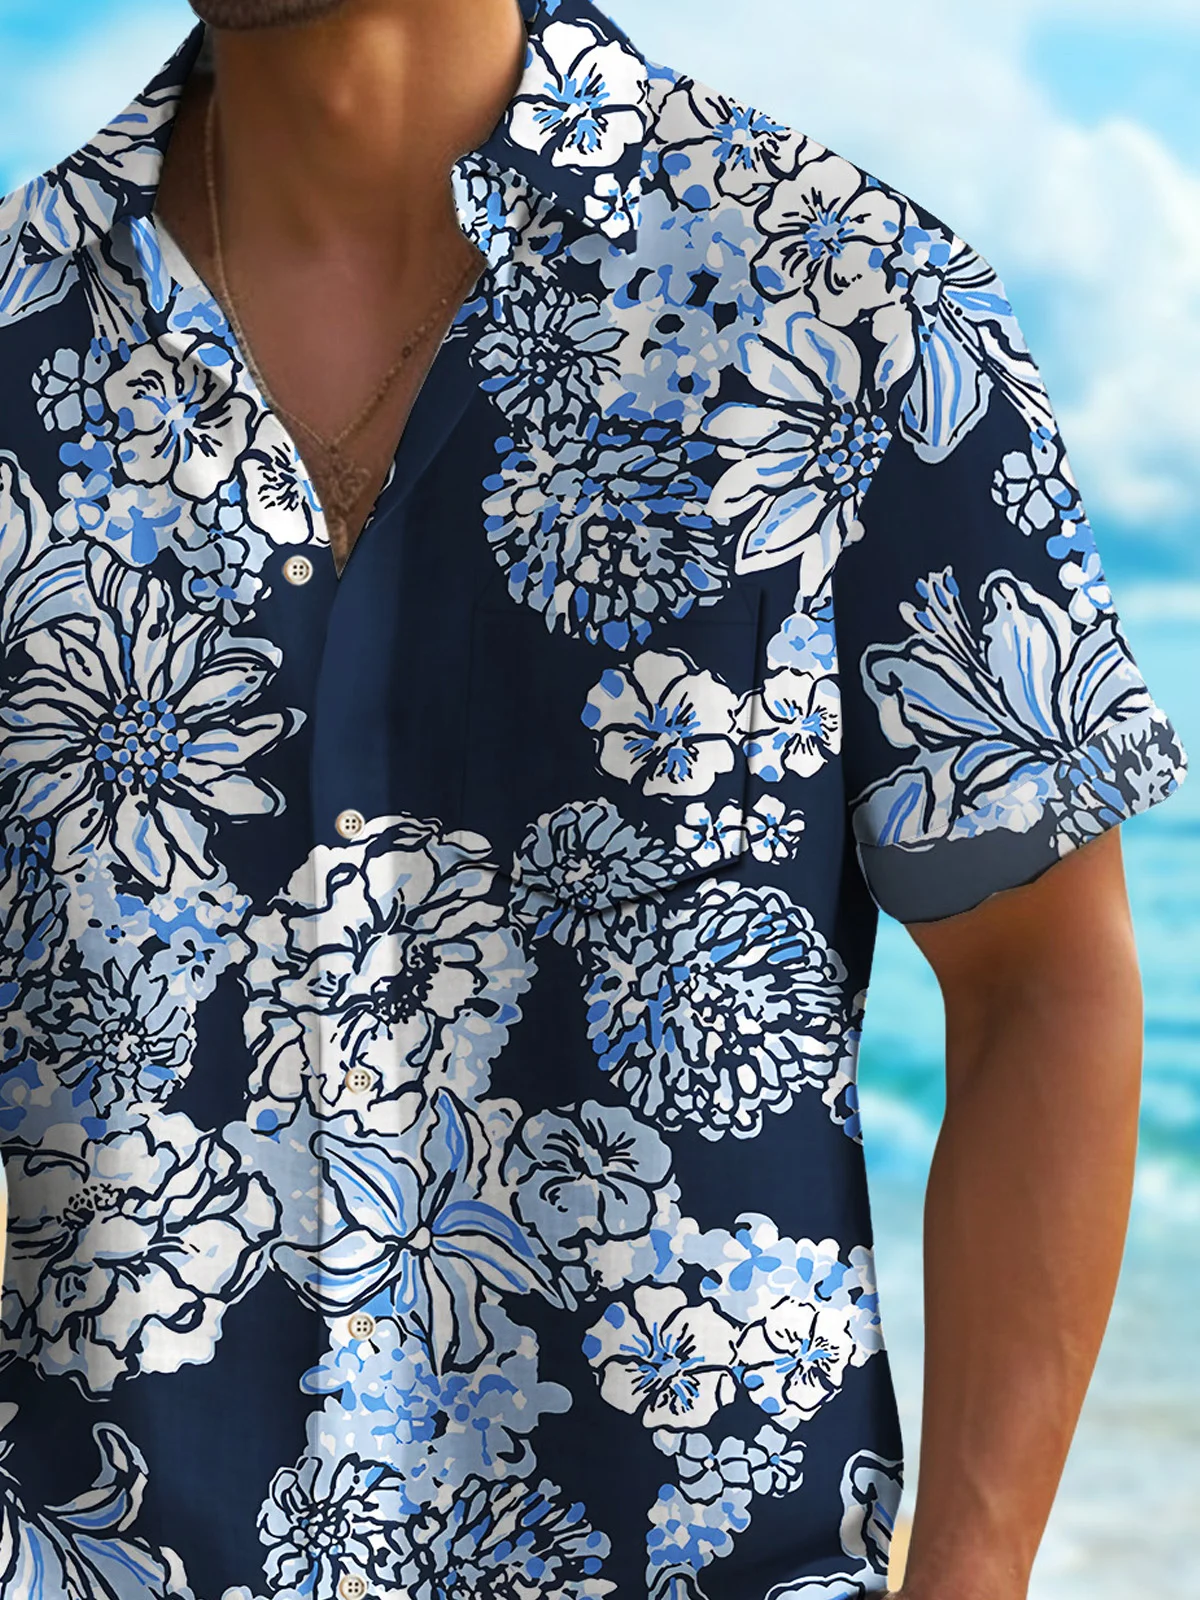 Royaura® Beach Vacation Men's Hawaiian Shirt Artistic Floral Stretch Pocket Wrinkle Free Seersucker Camp Shirt Big Tall